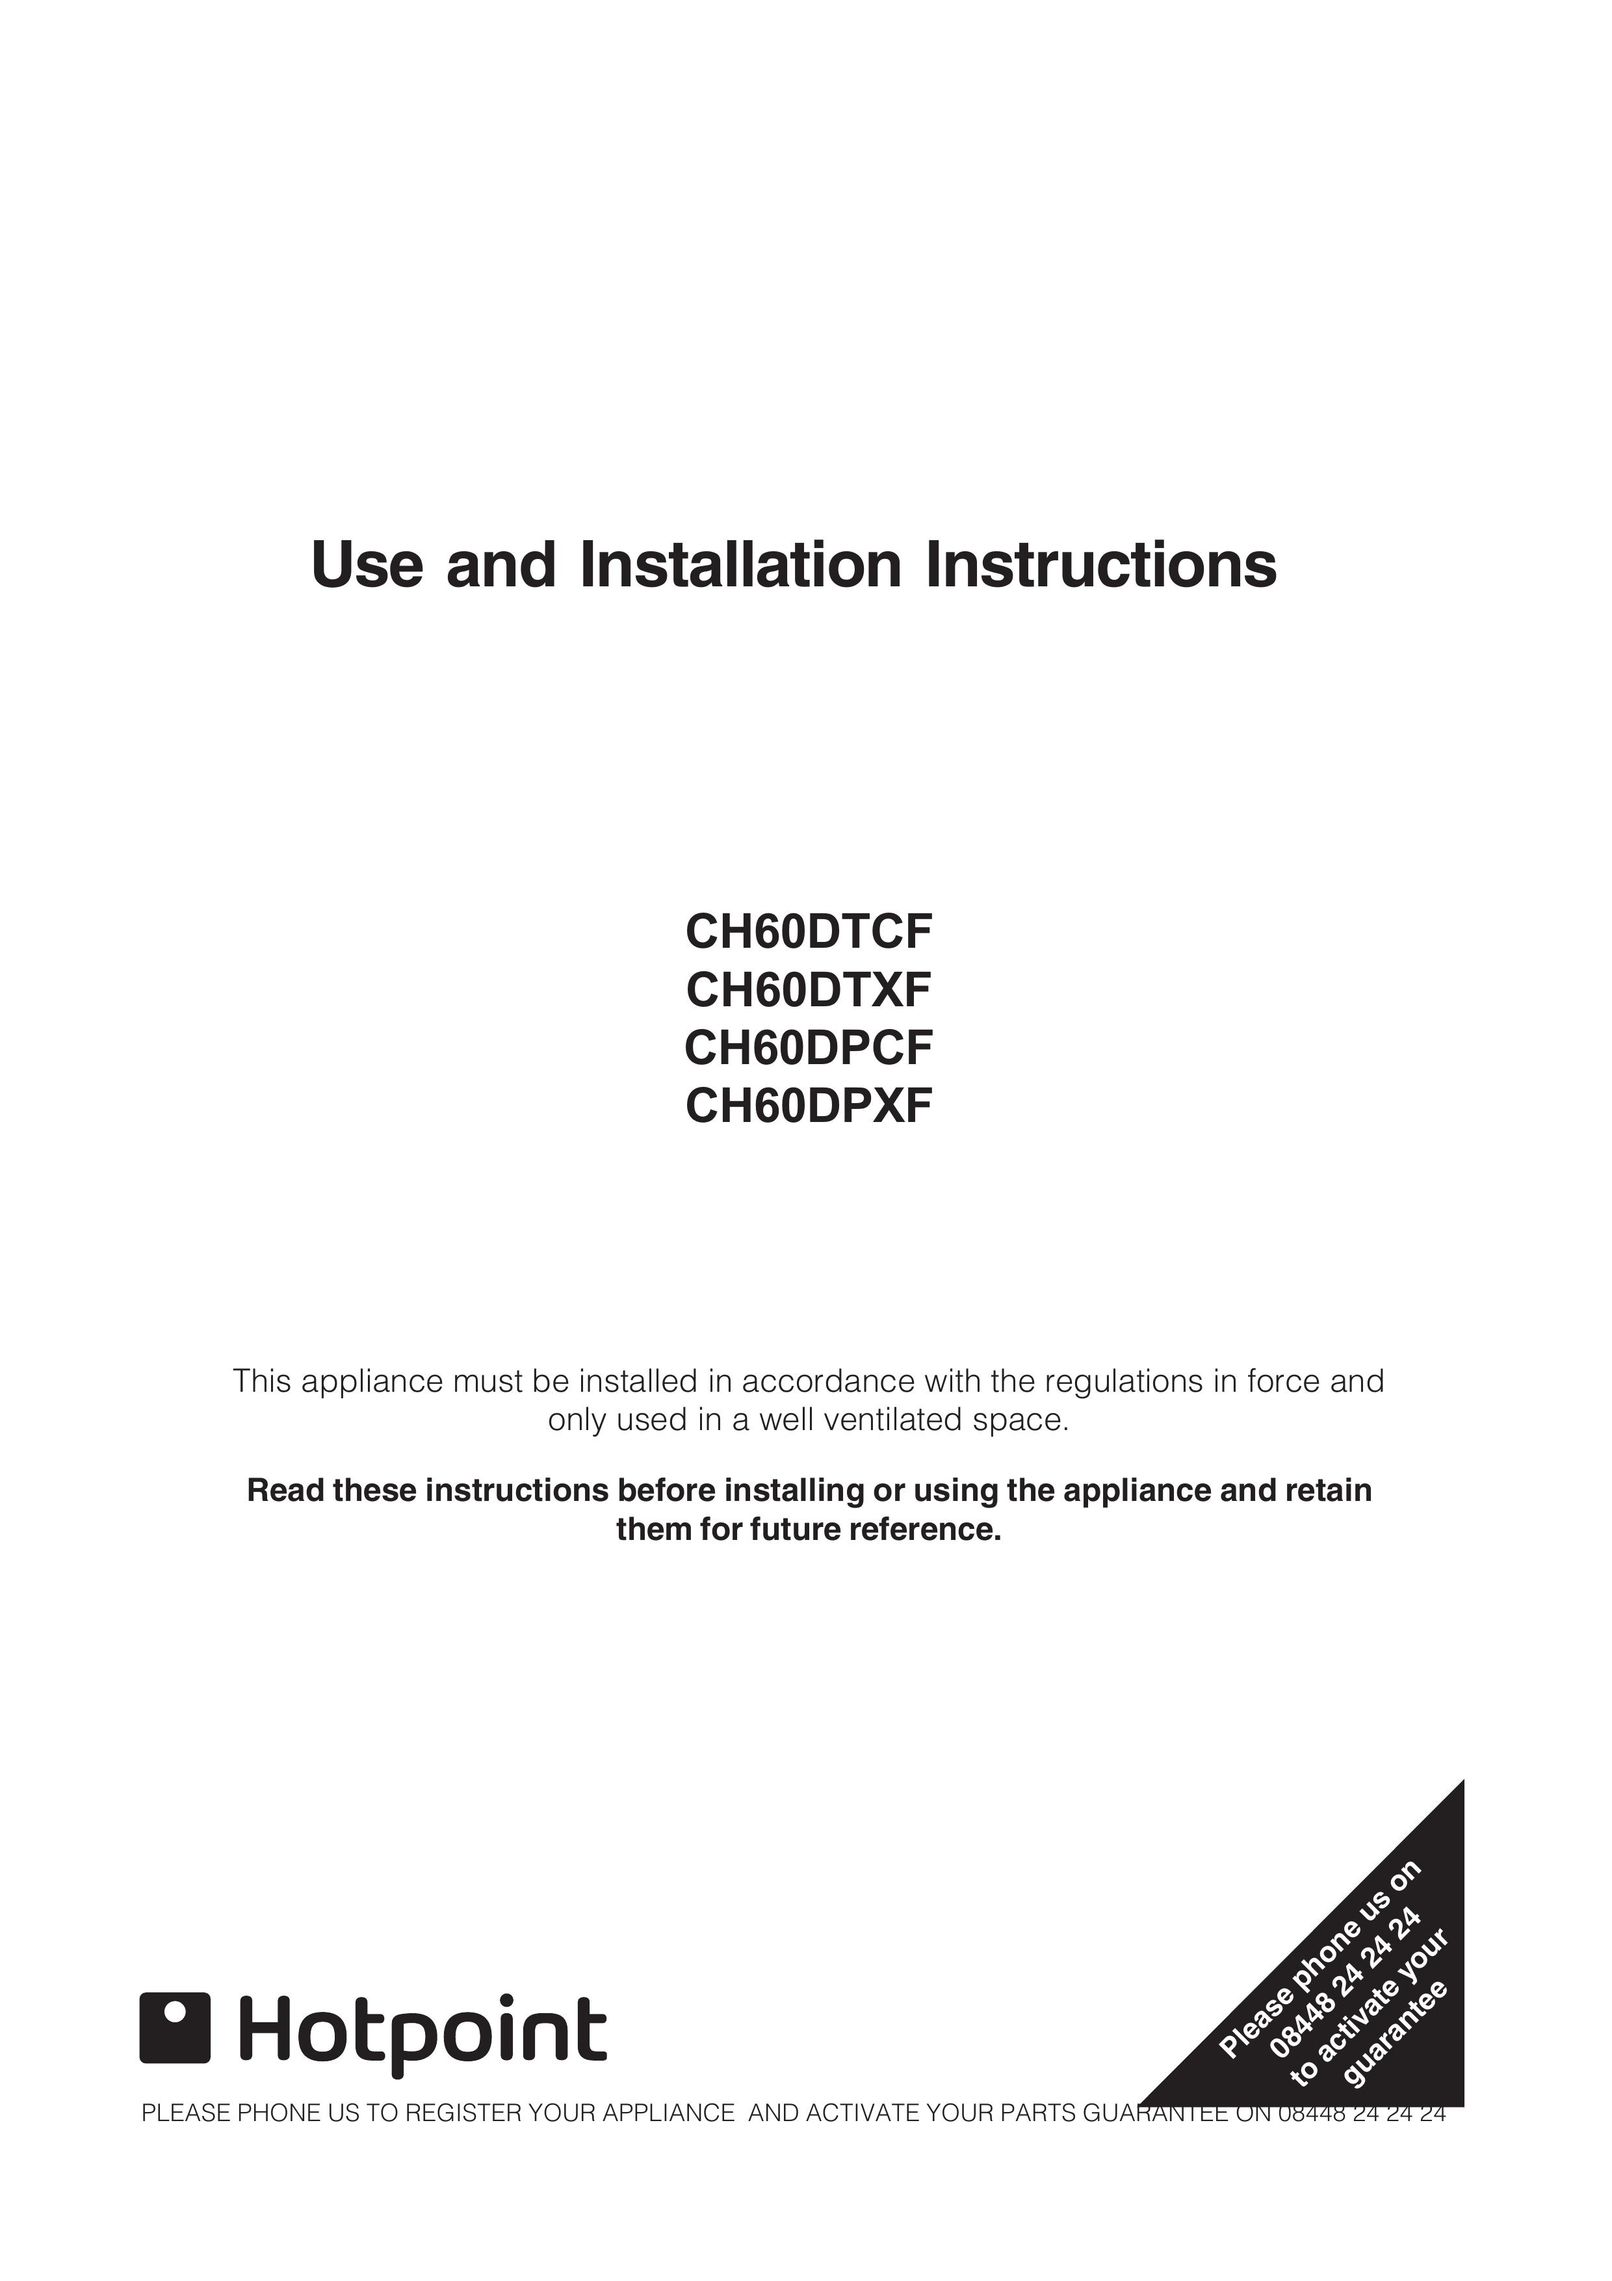 Xerox CH60DTCF Oven User Manual